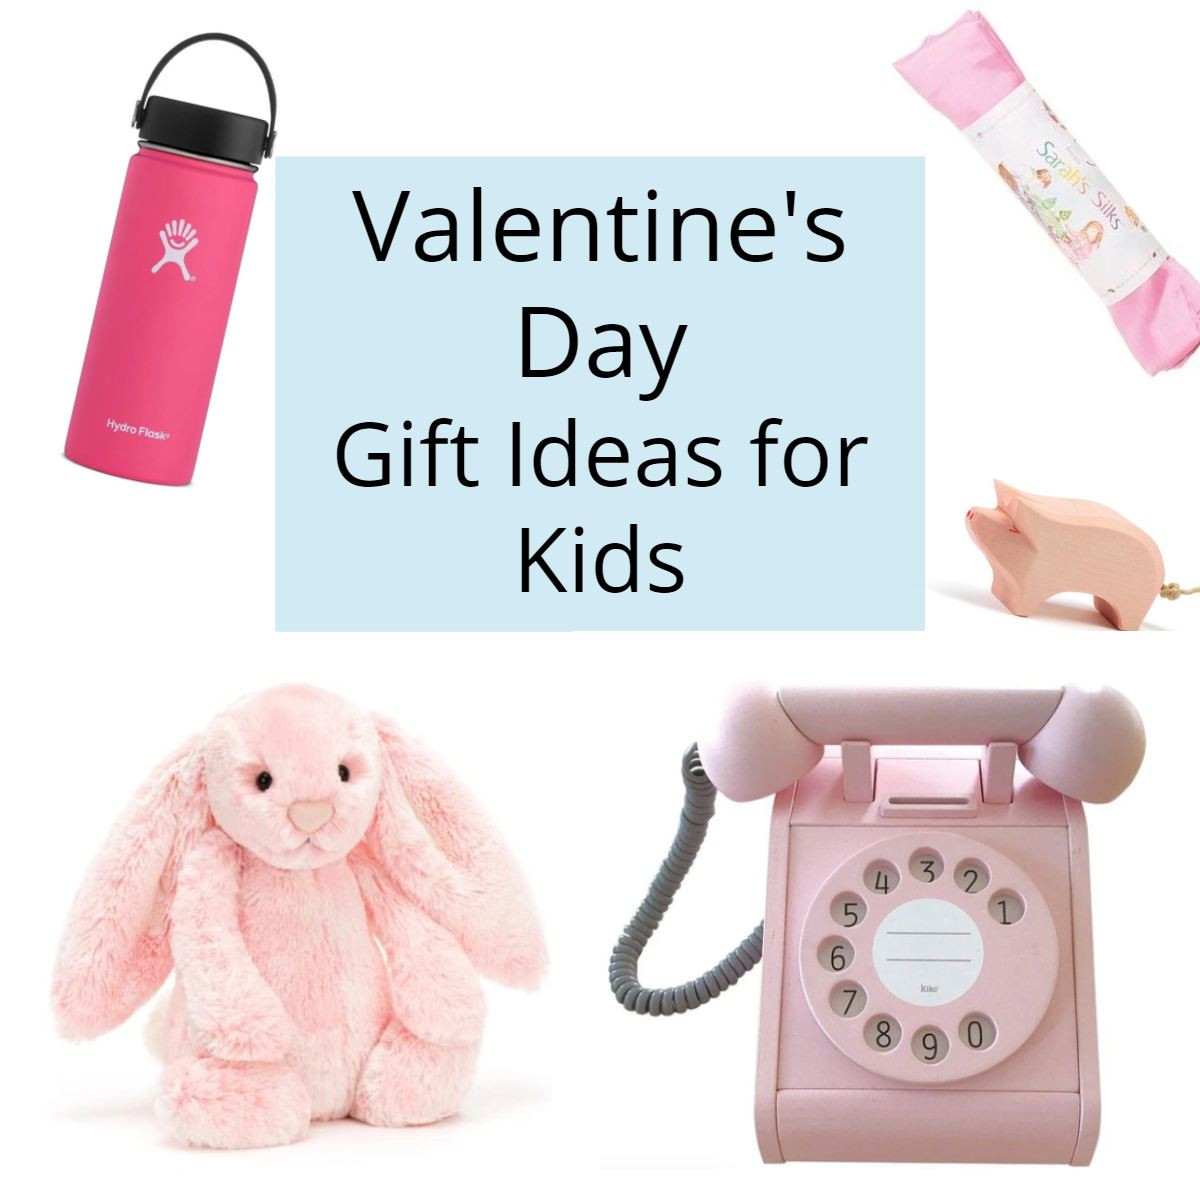 Valentines 2020 Gift Ideas
 Valentine’s Day Gift Ideas for Kids 2020 – The Modern